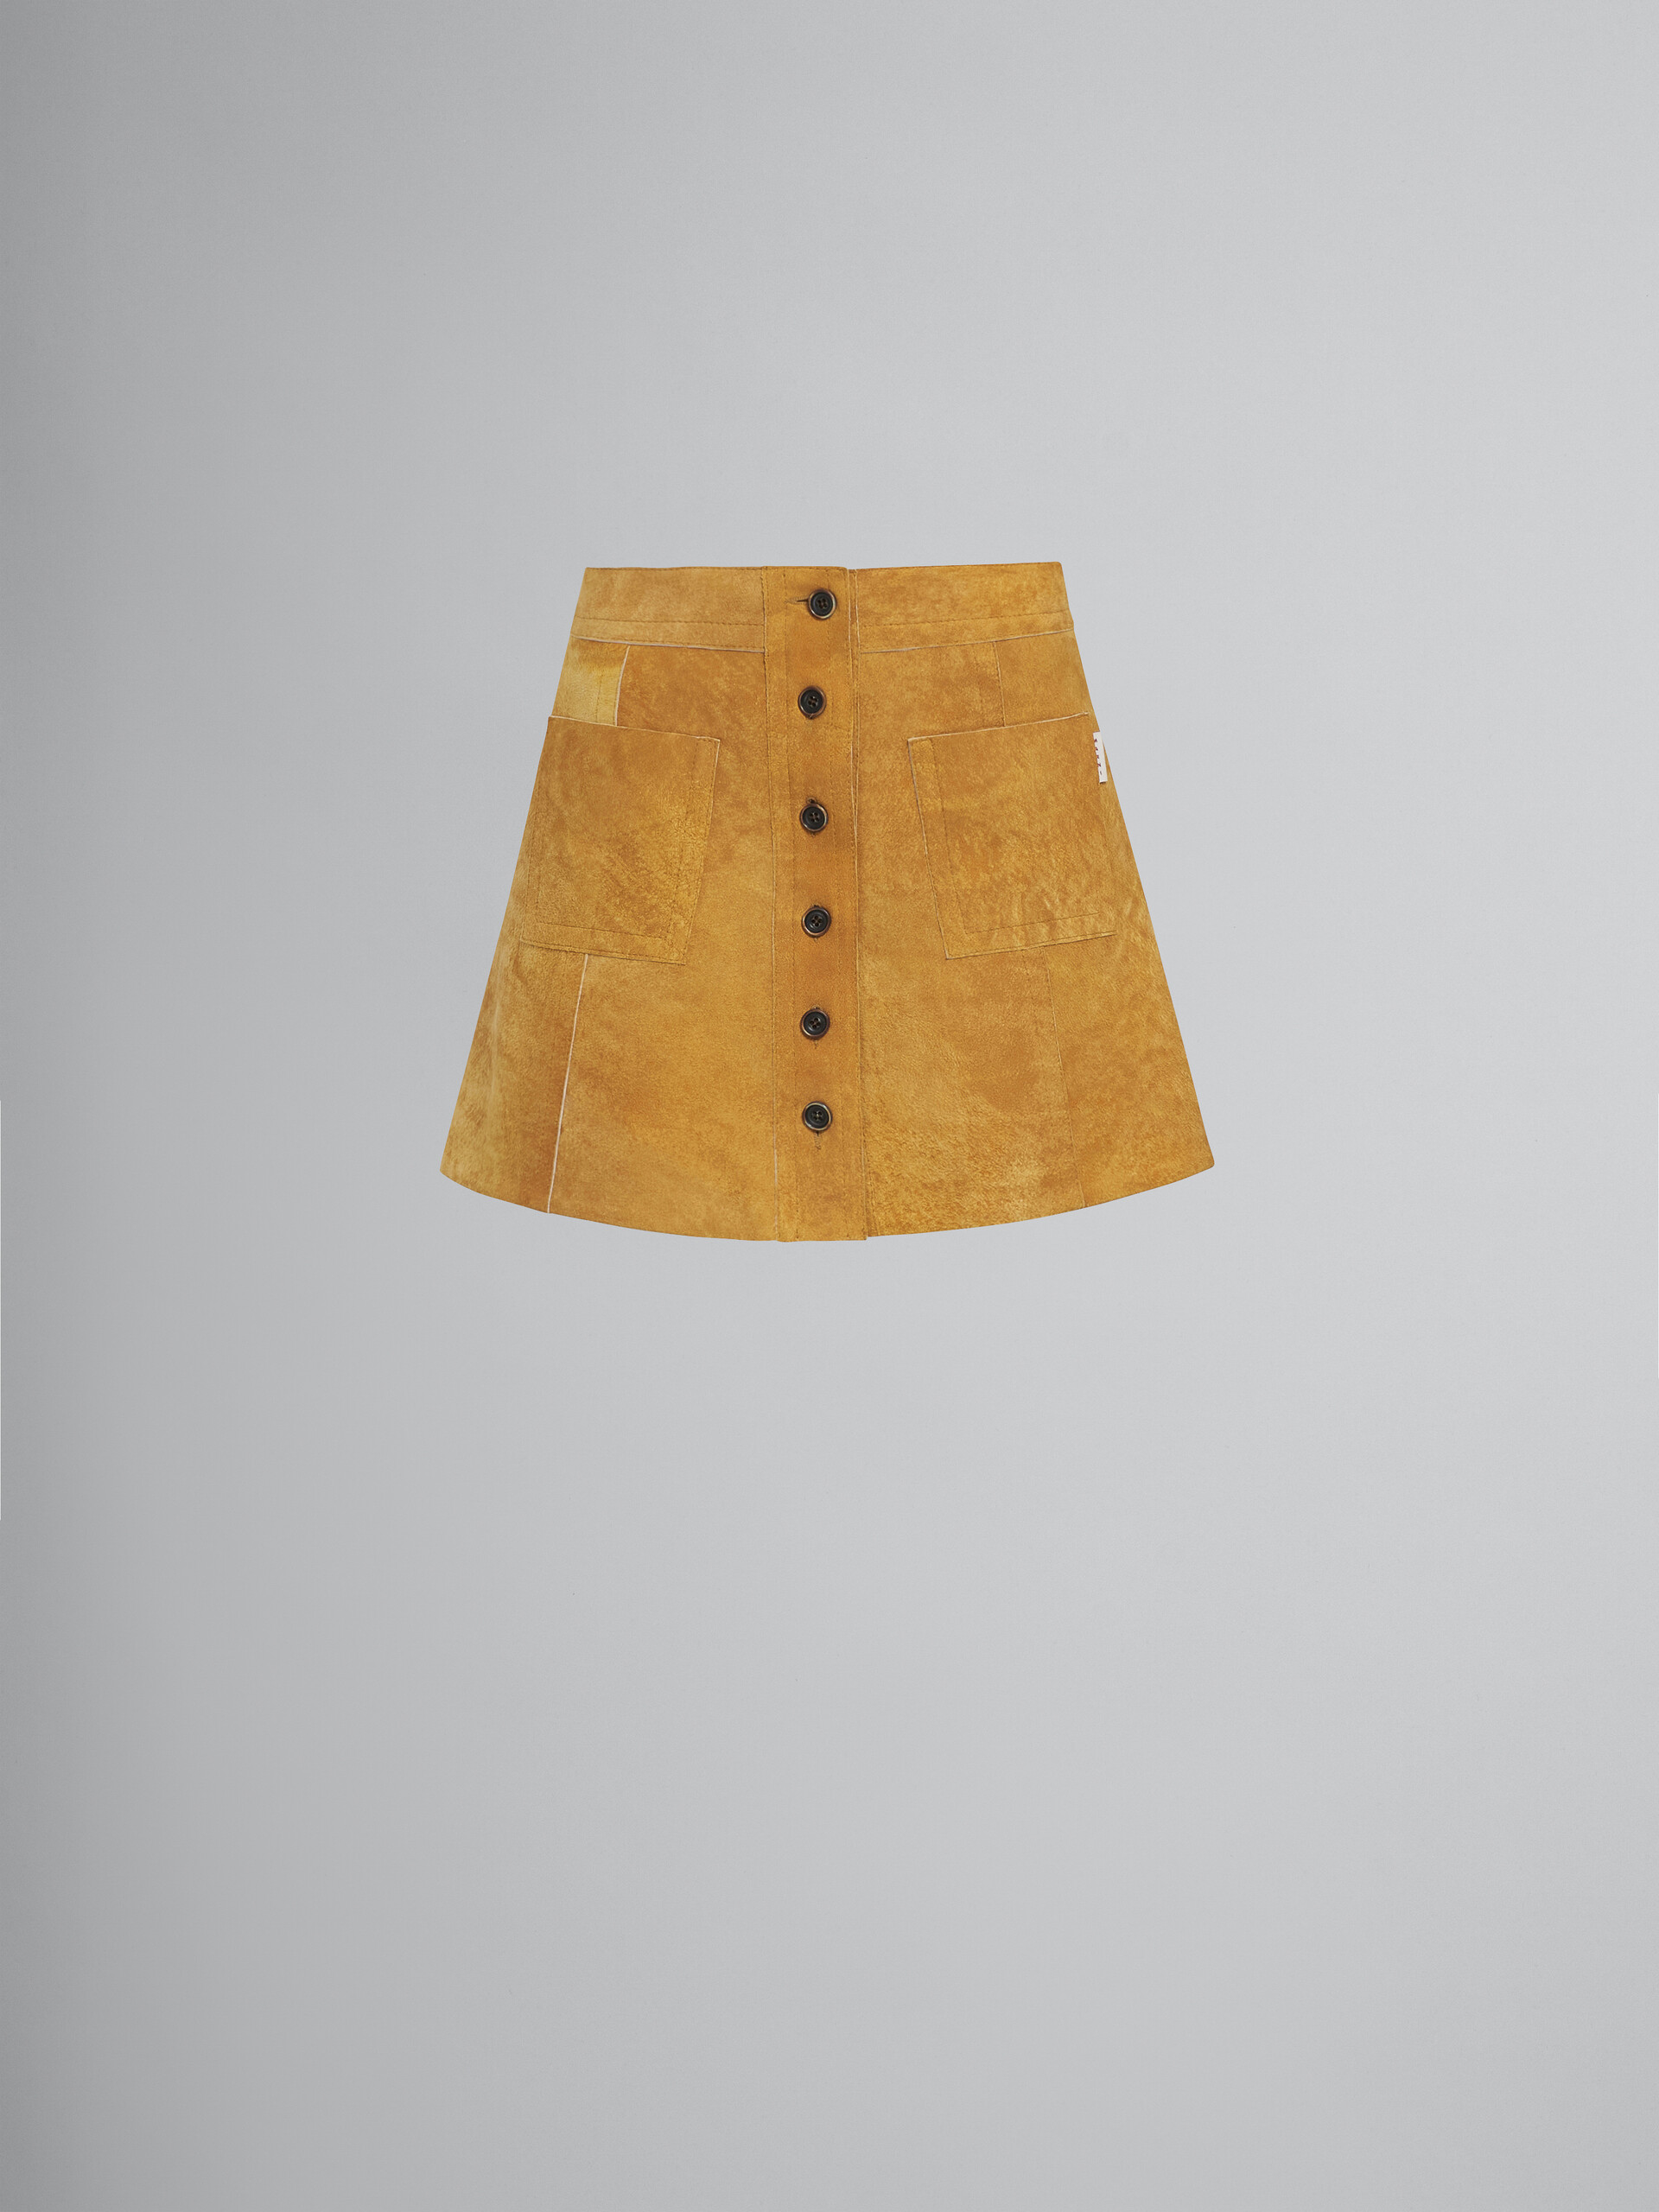 Light orange leather skirt - Skirts - Image 1